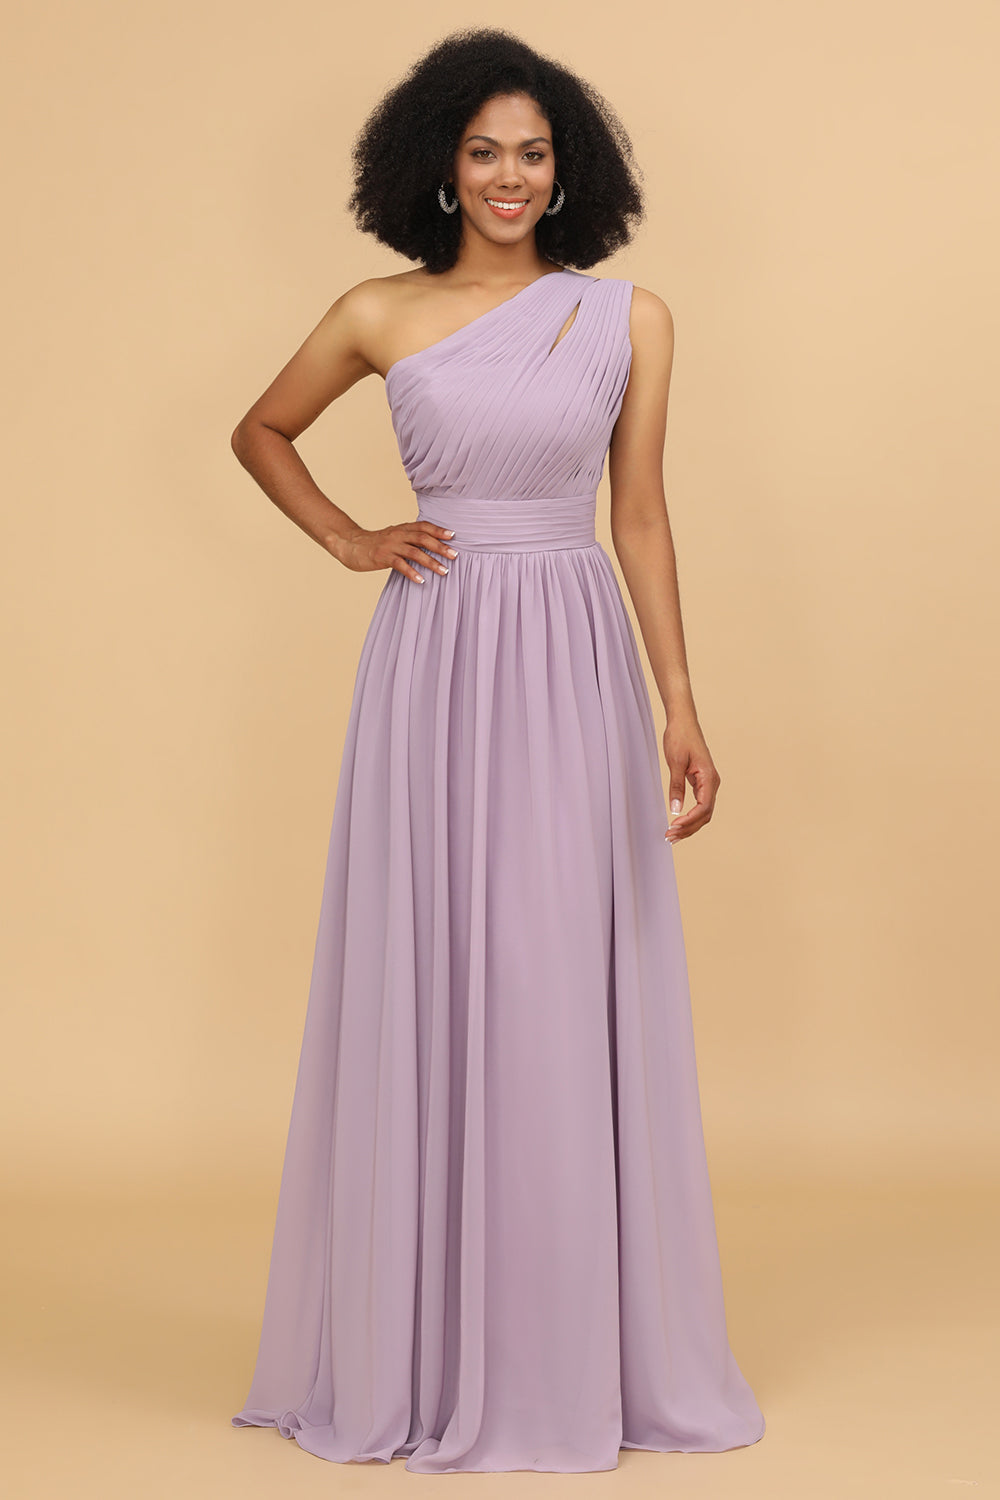 Zapakasa A-line Lilac One Shoulder Chiffon Long Bridesmaid Dress